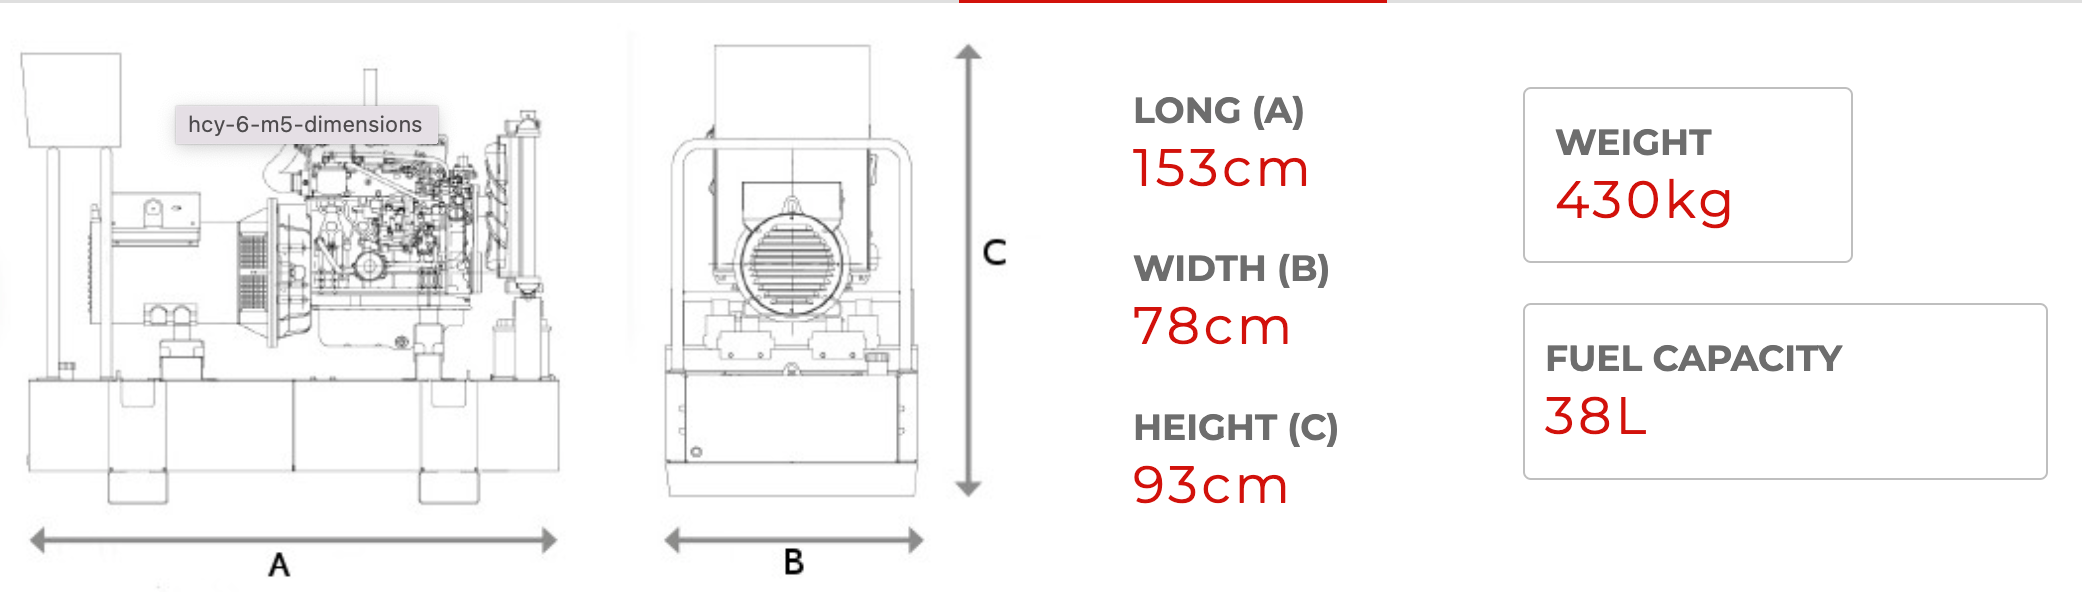 HCY-6 M5 6 kVA Generator Dimensions